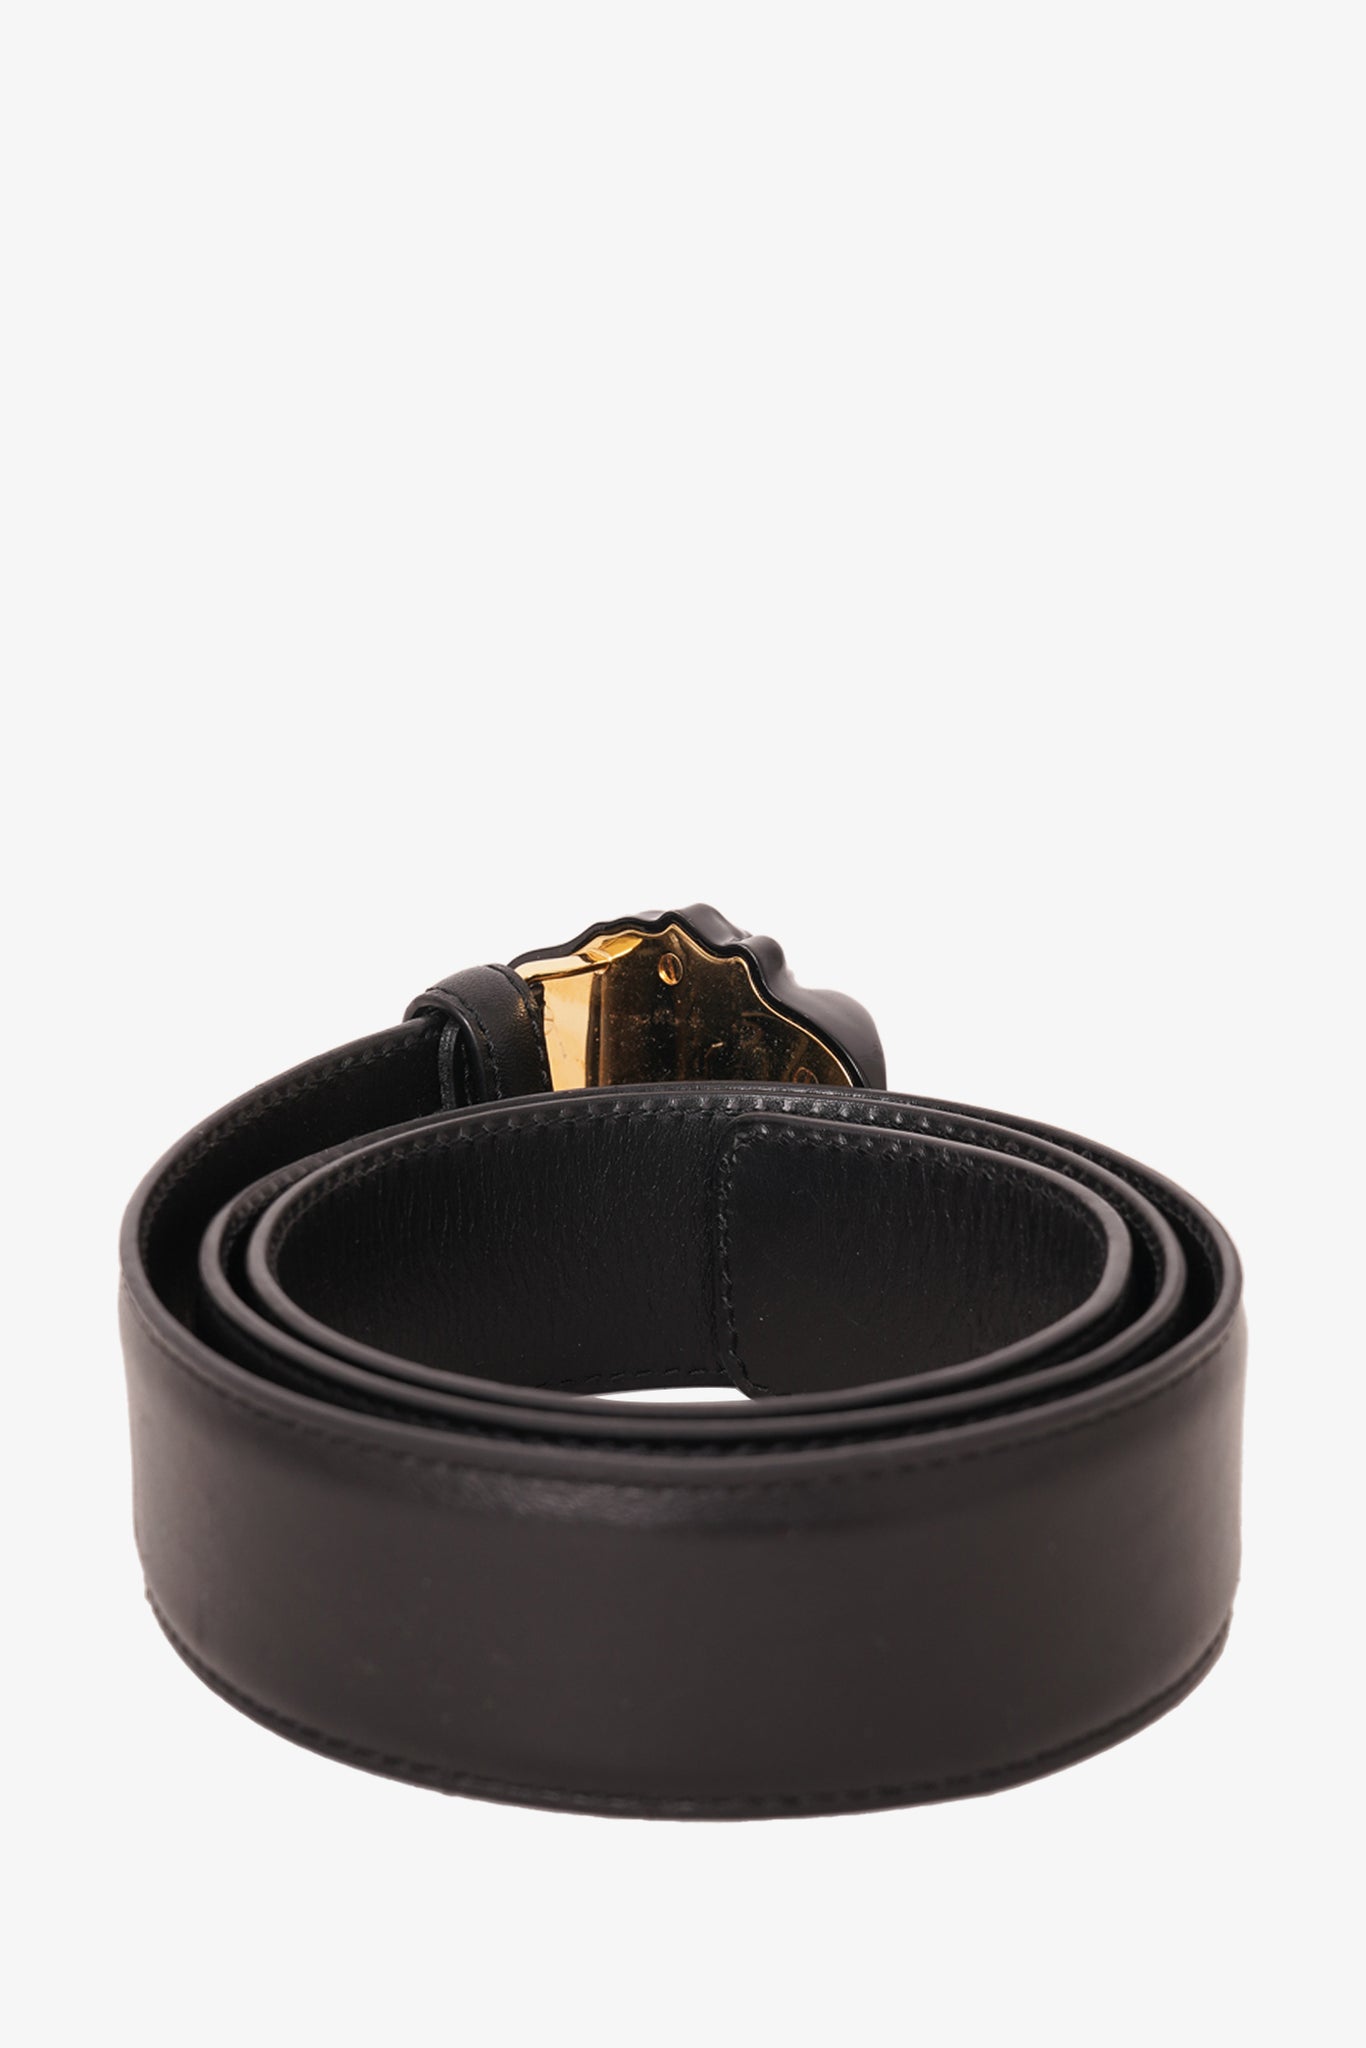 Versace Black Leather Medusa Buckle Belt Size 36